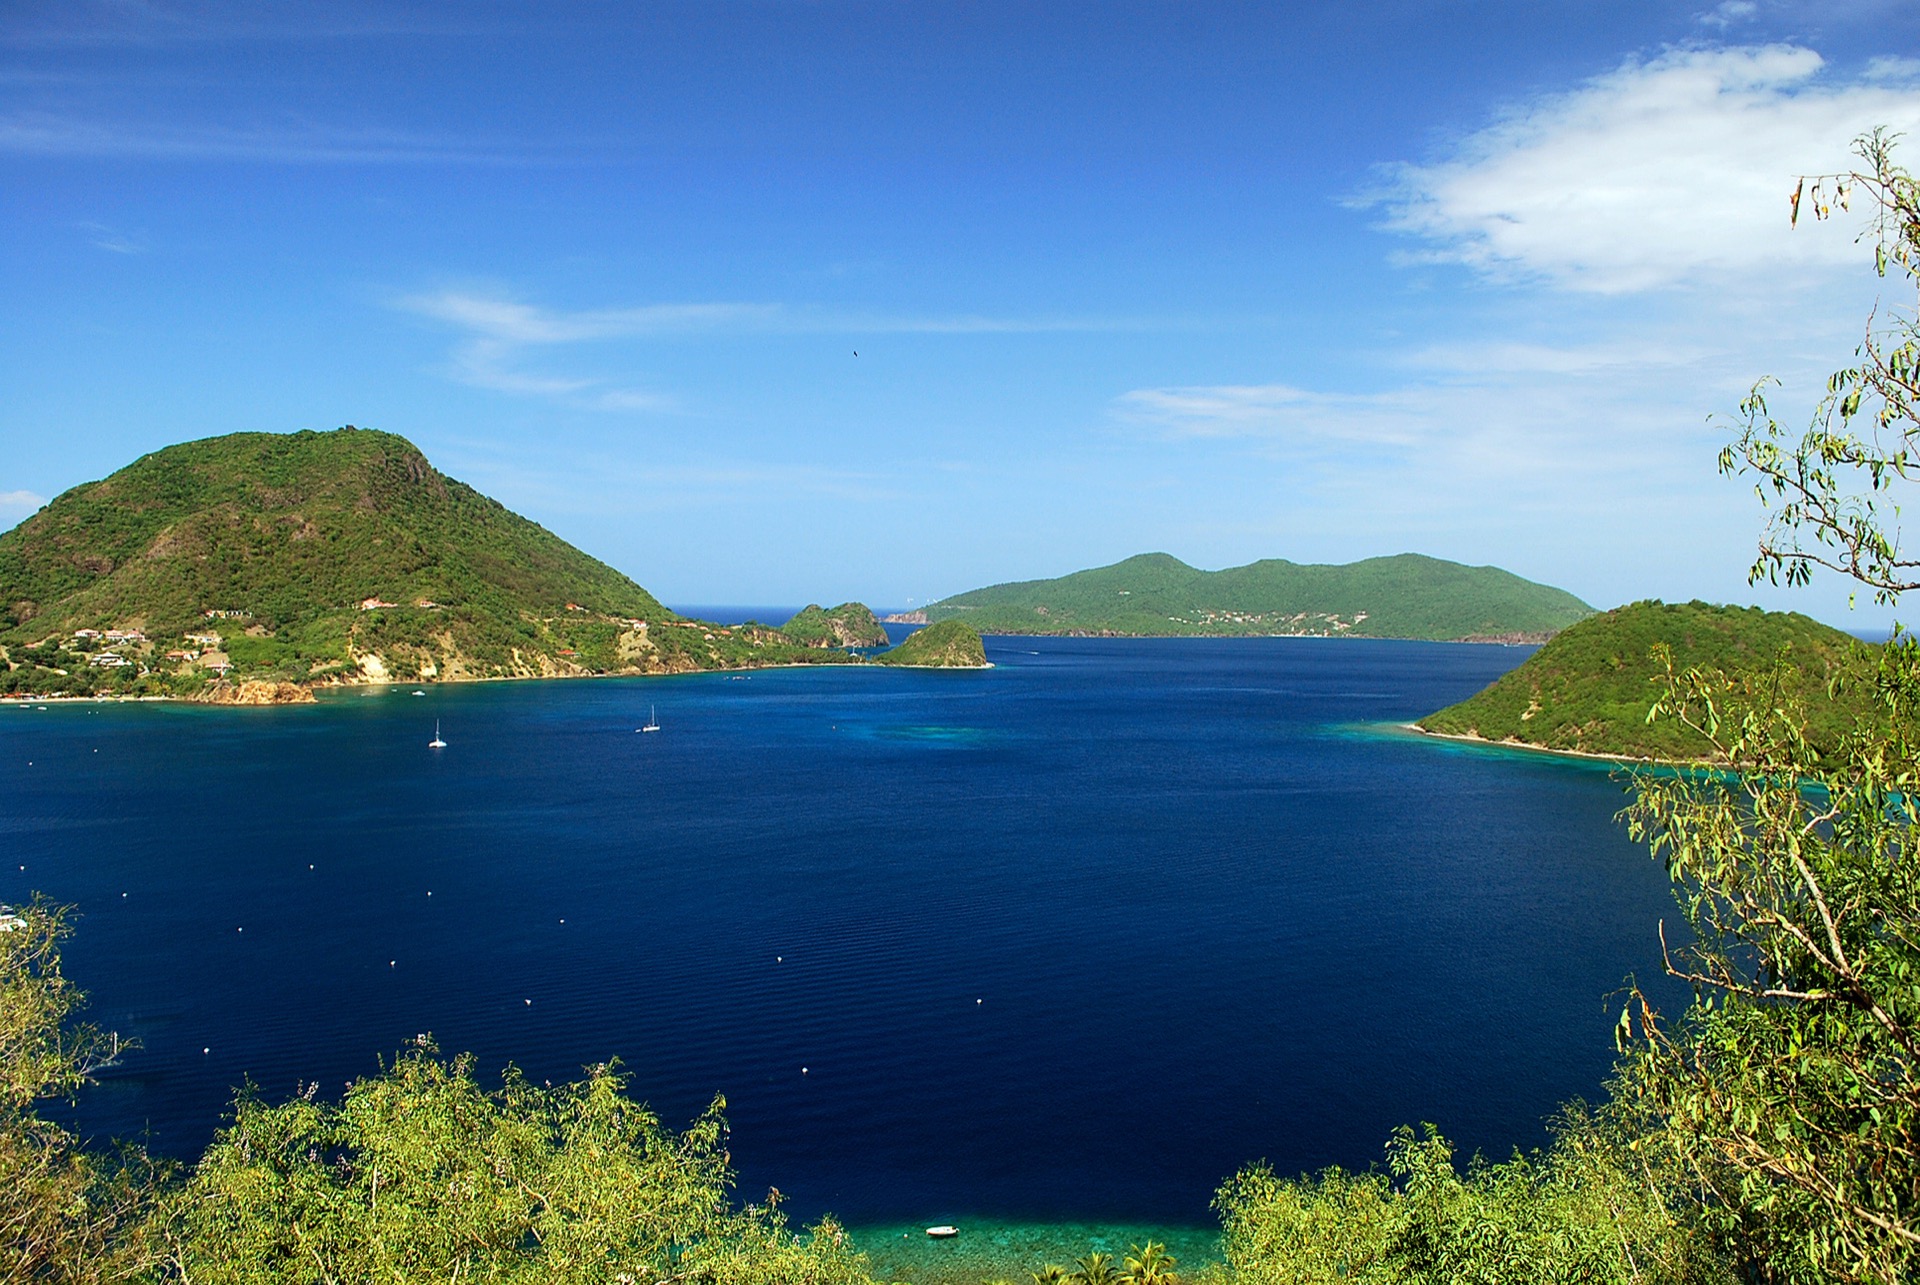 GrANoLA, la&nbsp;grande île des Antilles aujourd’hui disparue. © raybecca, Adobe Stock